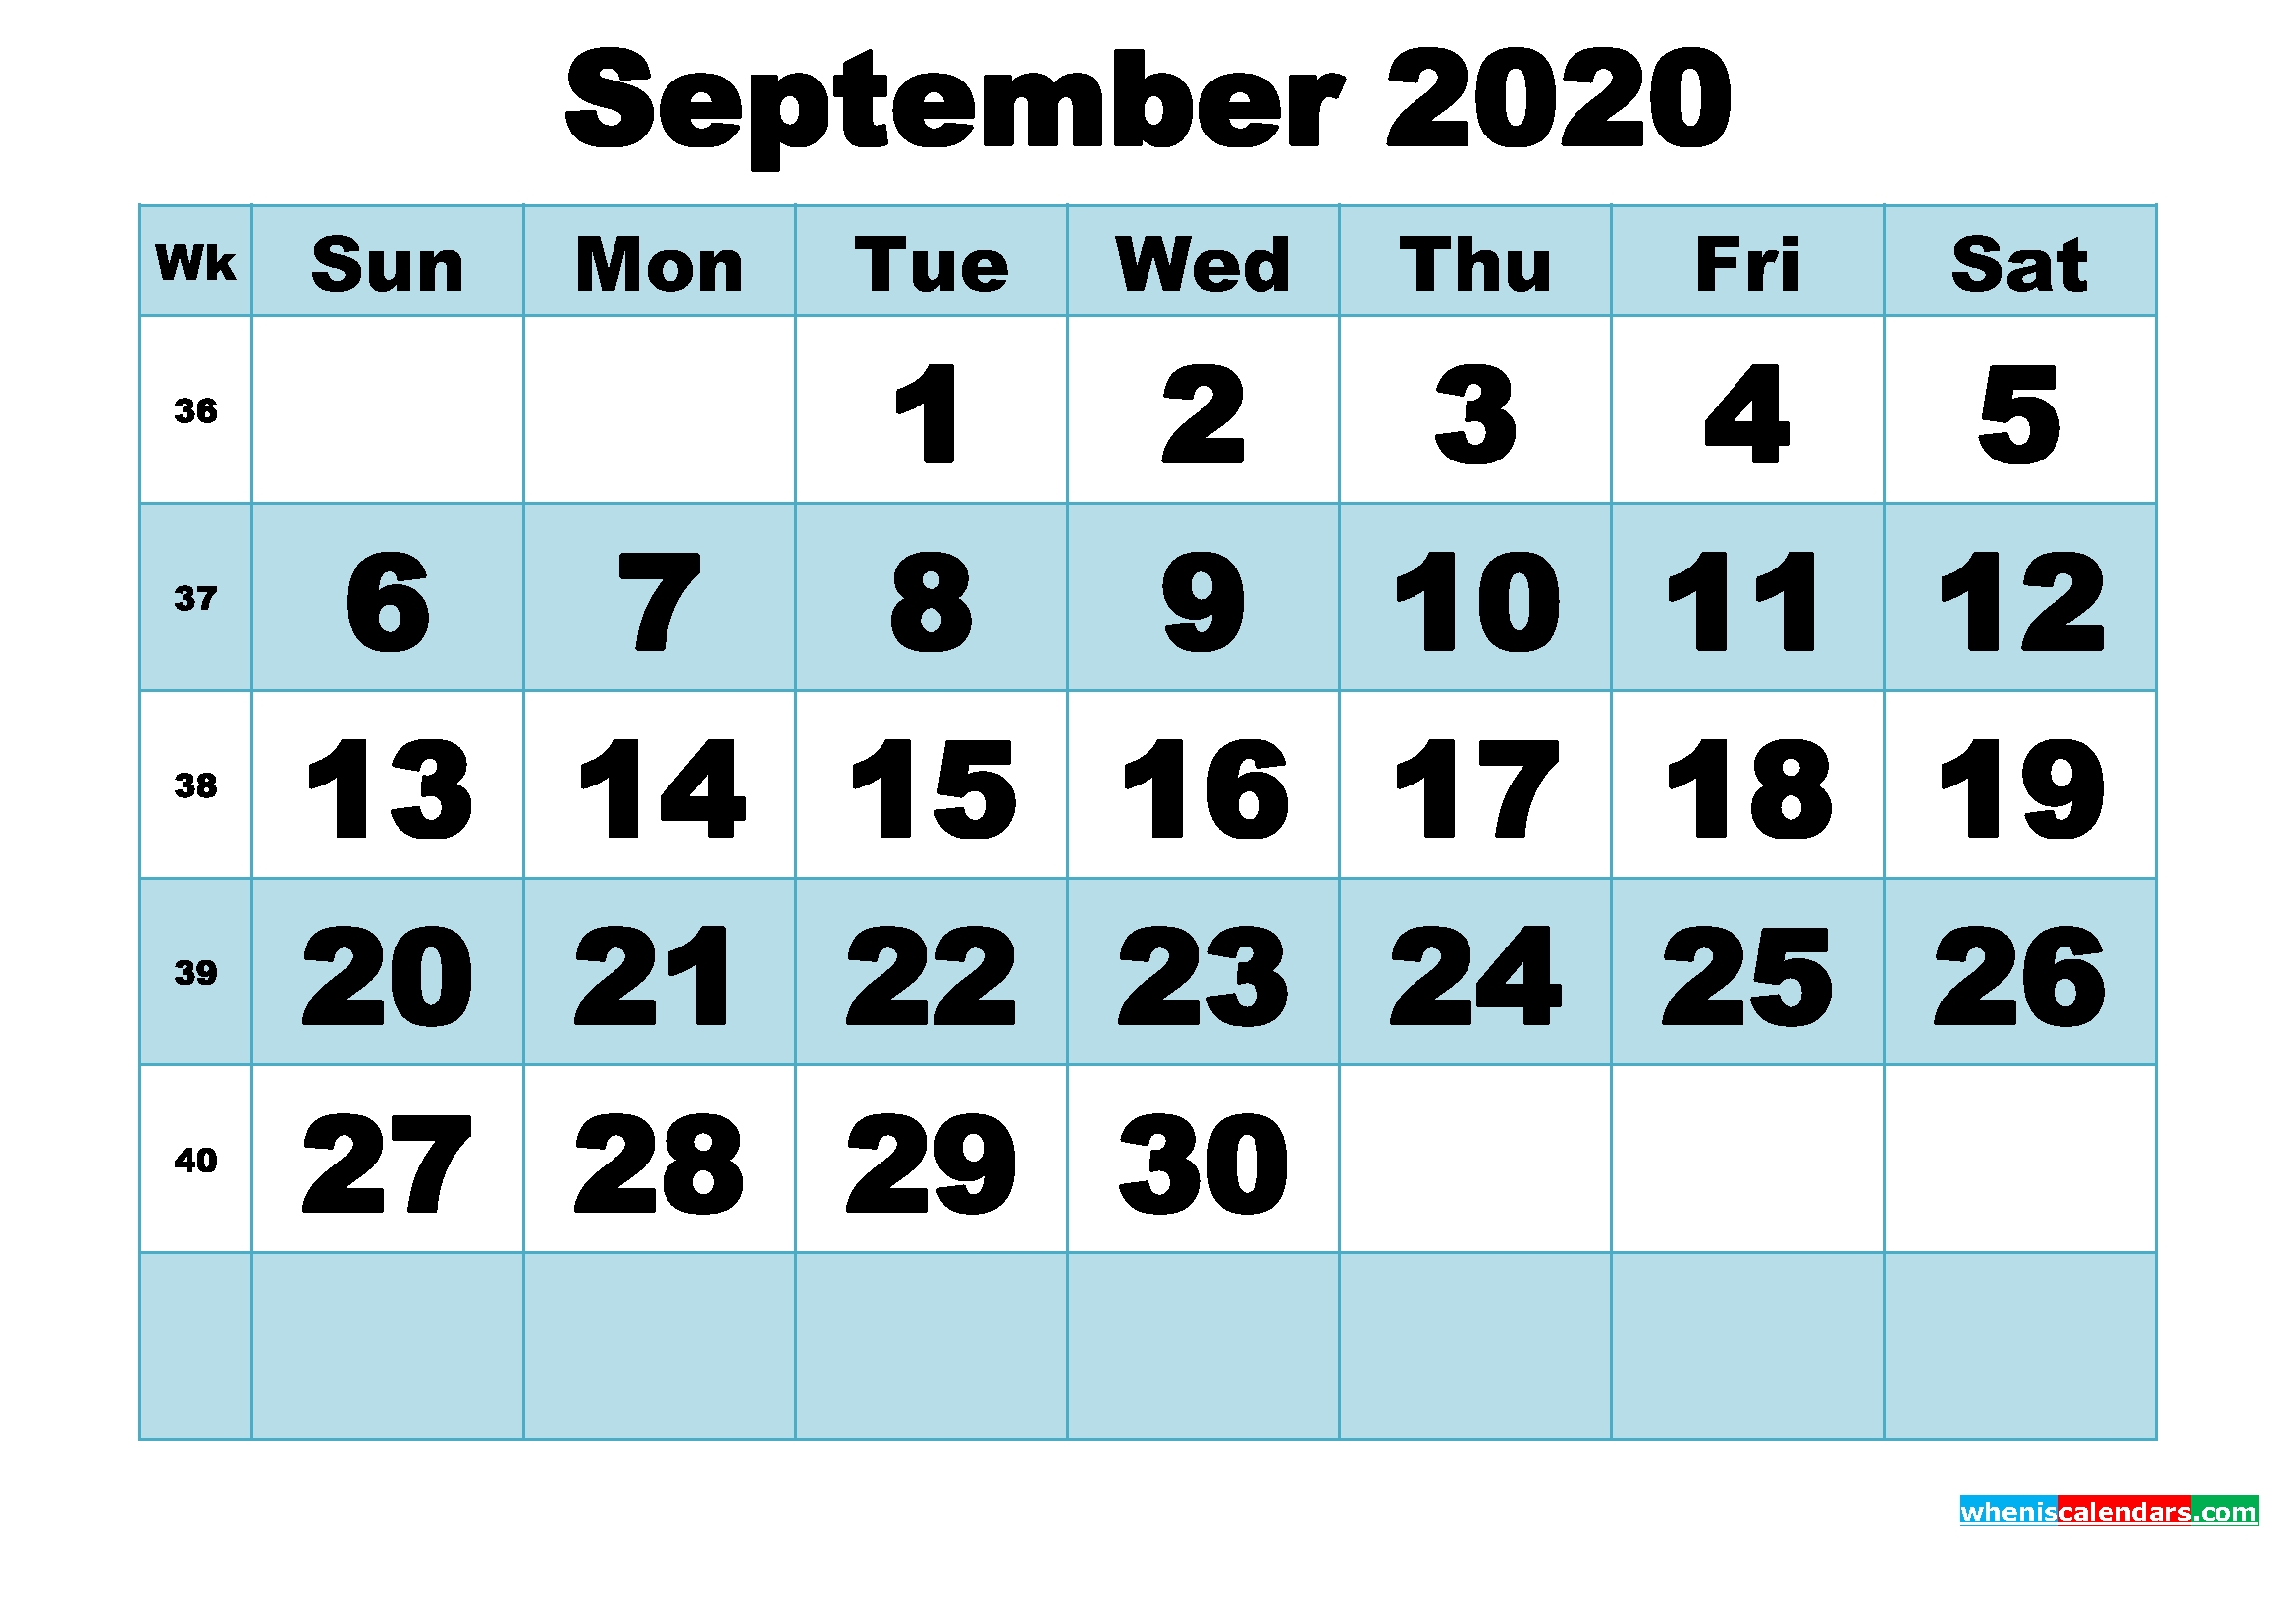 Free Printable September 2020 Calendar Word, Pdf, Image | Free Printable 2020 Calendar With Holidays September 2020 To January 2021 Calendar